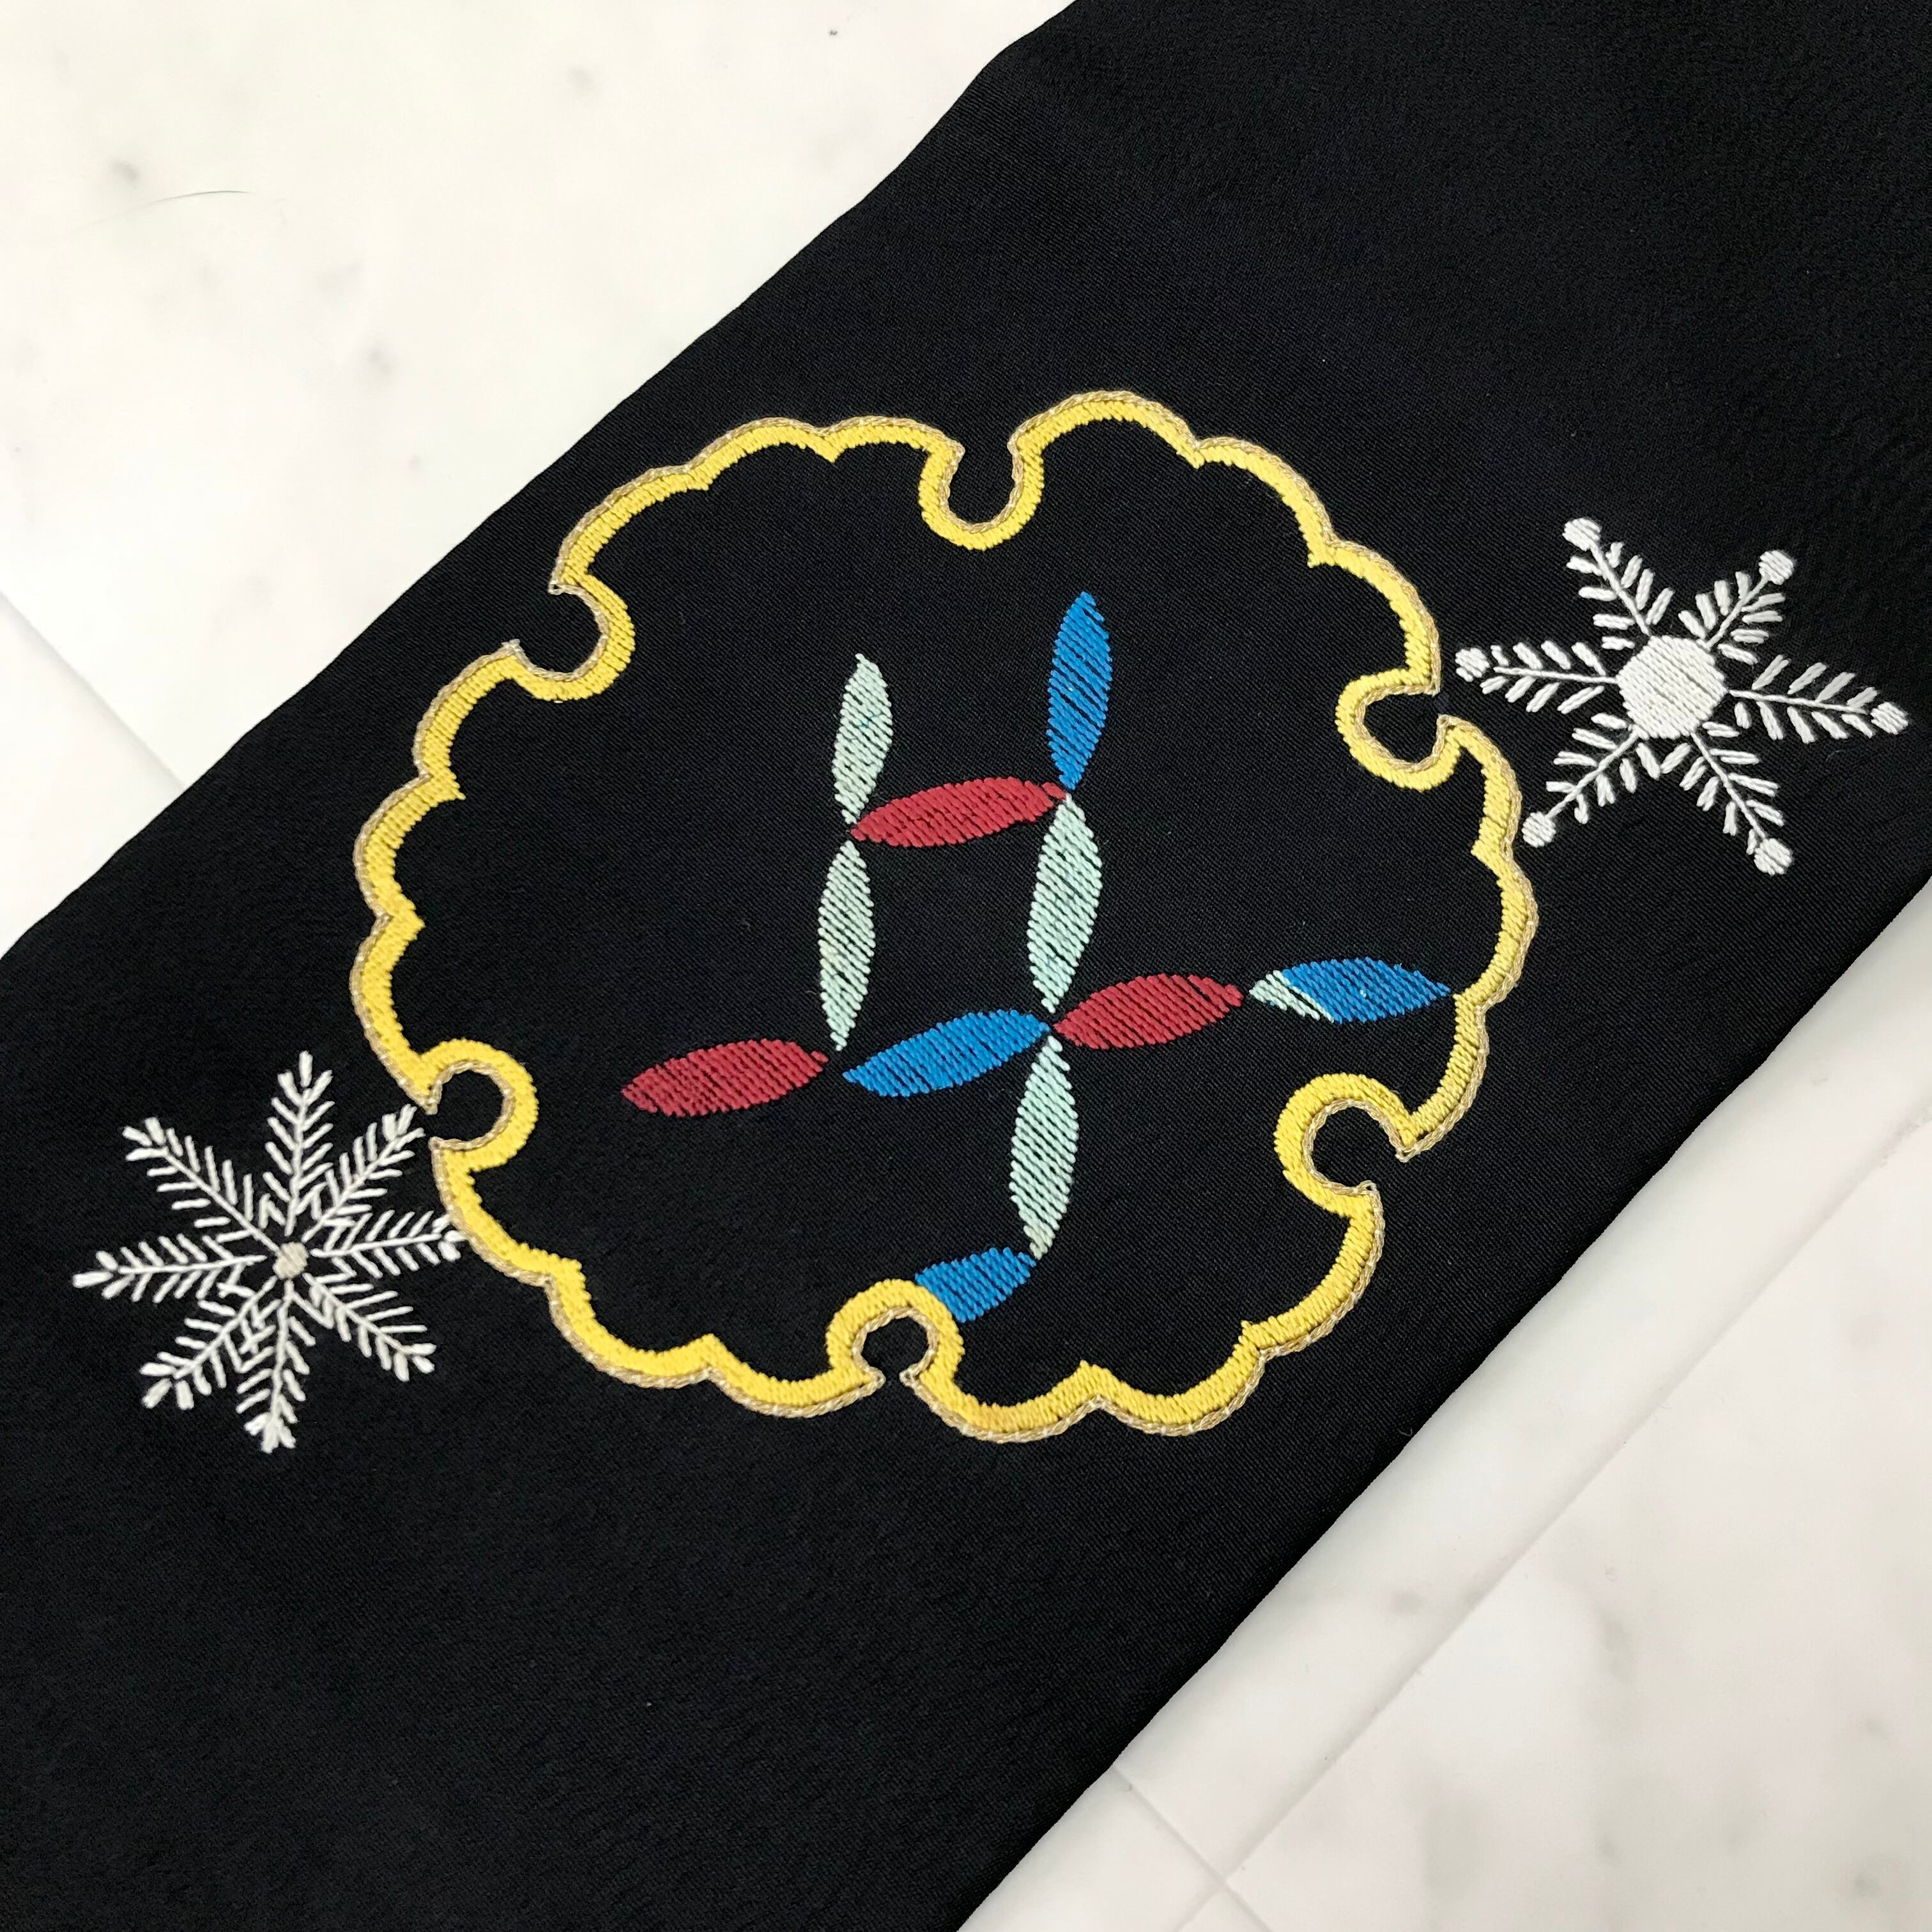 AO-422 アンティーク帯 名古屋帯 雪輪紋 雪の結晶 七宝 花菱 刺繍